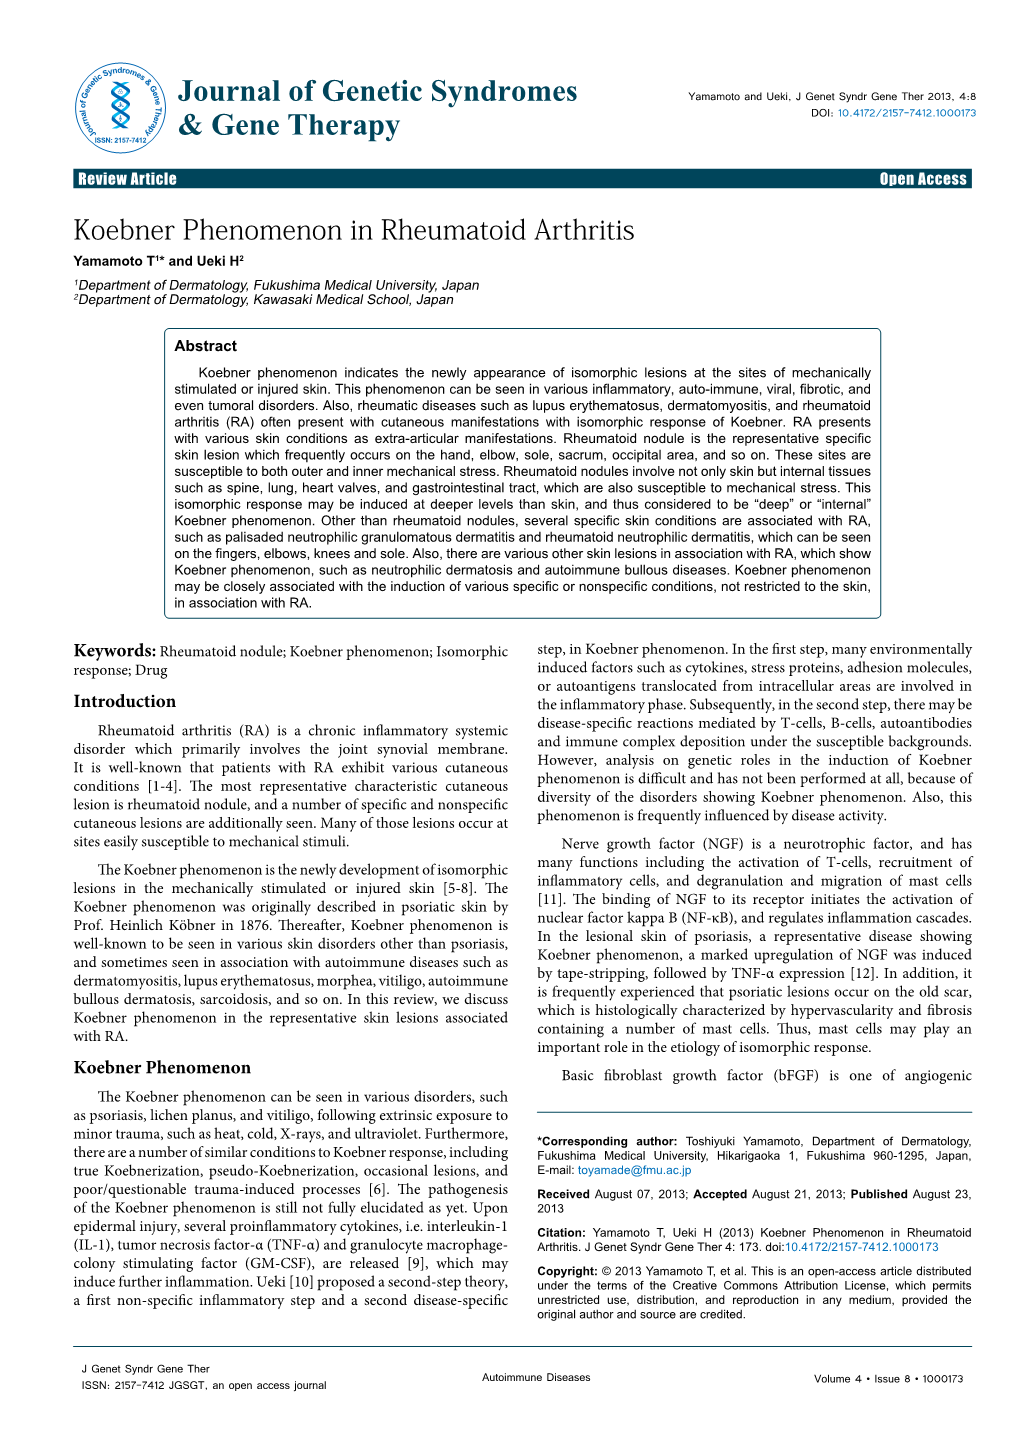 Koebner Phenomenon in Rheumatoid Arthritis